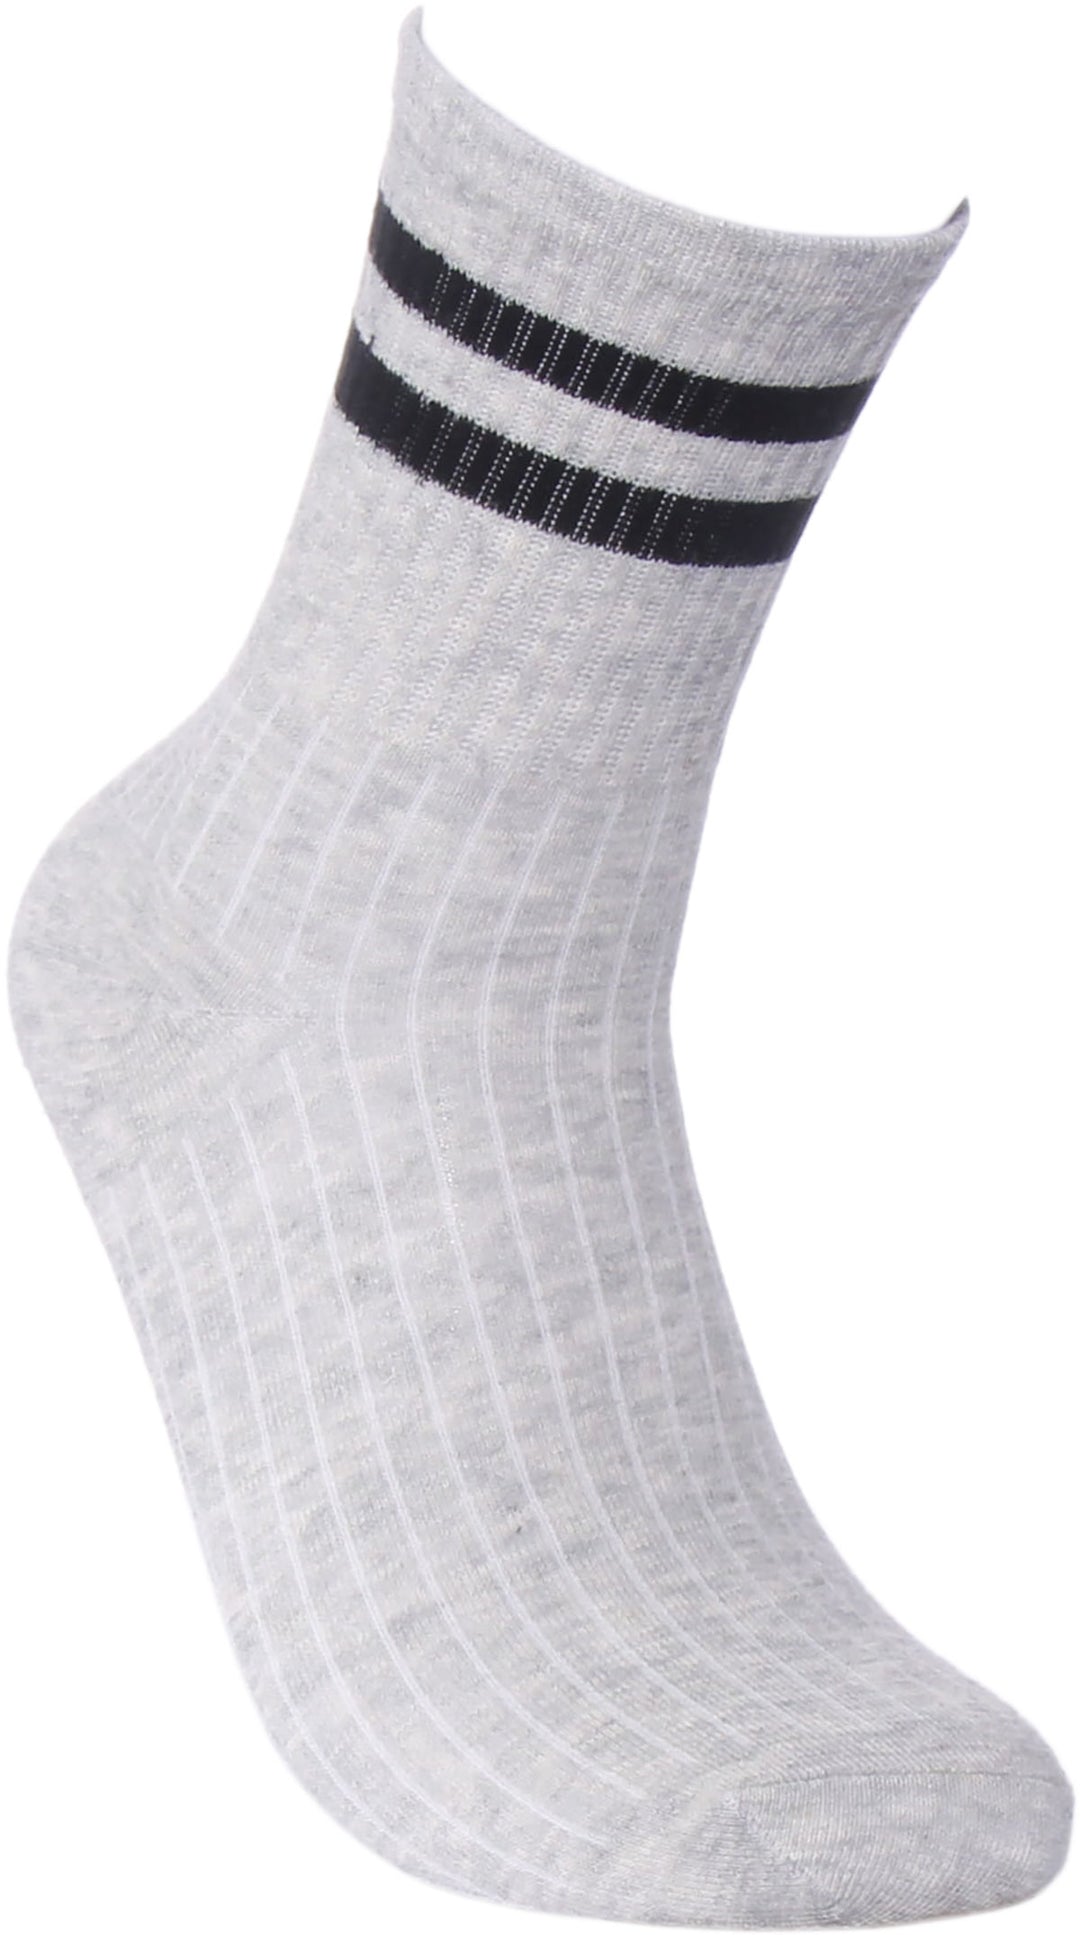 JUST TEESS Stripe Herren Baumwolle Socken Grau